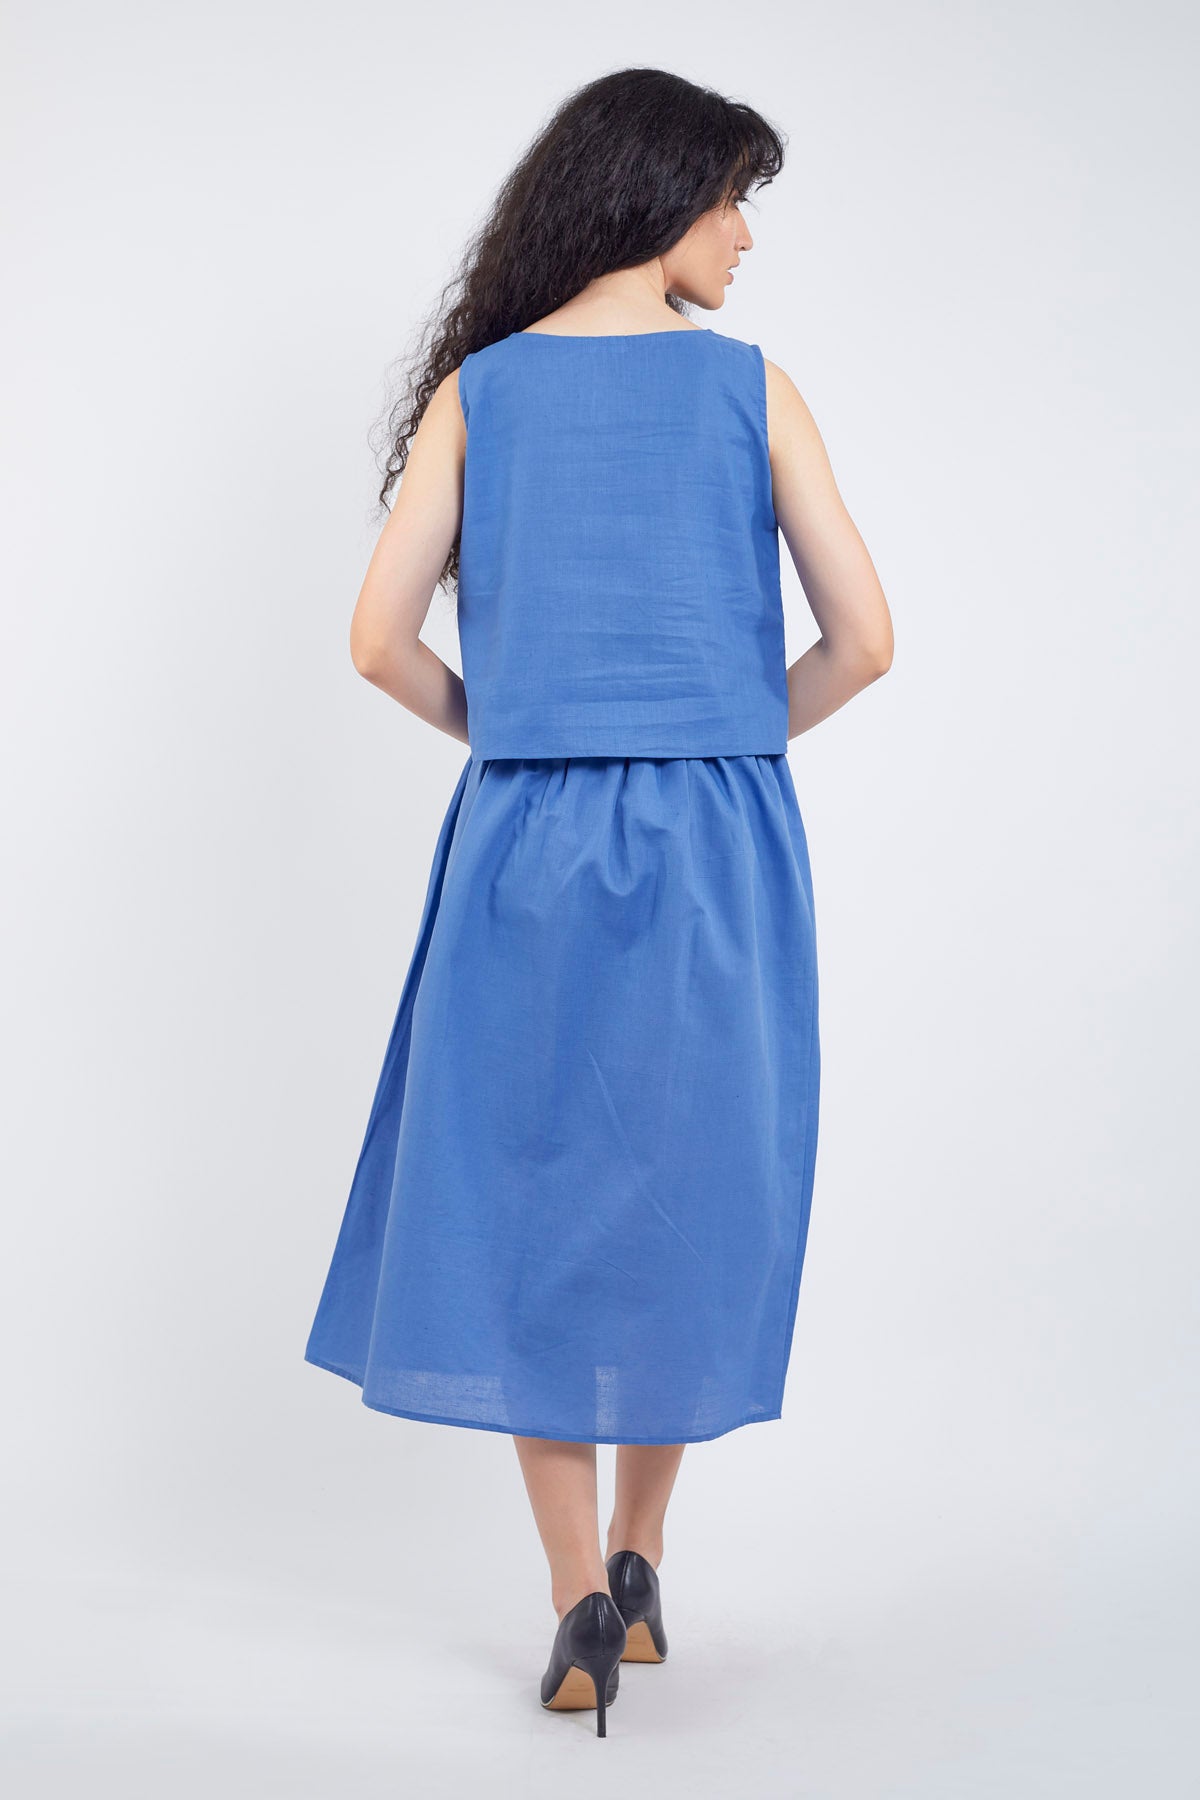 Veri Peri Cotton Linen Skirt Set